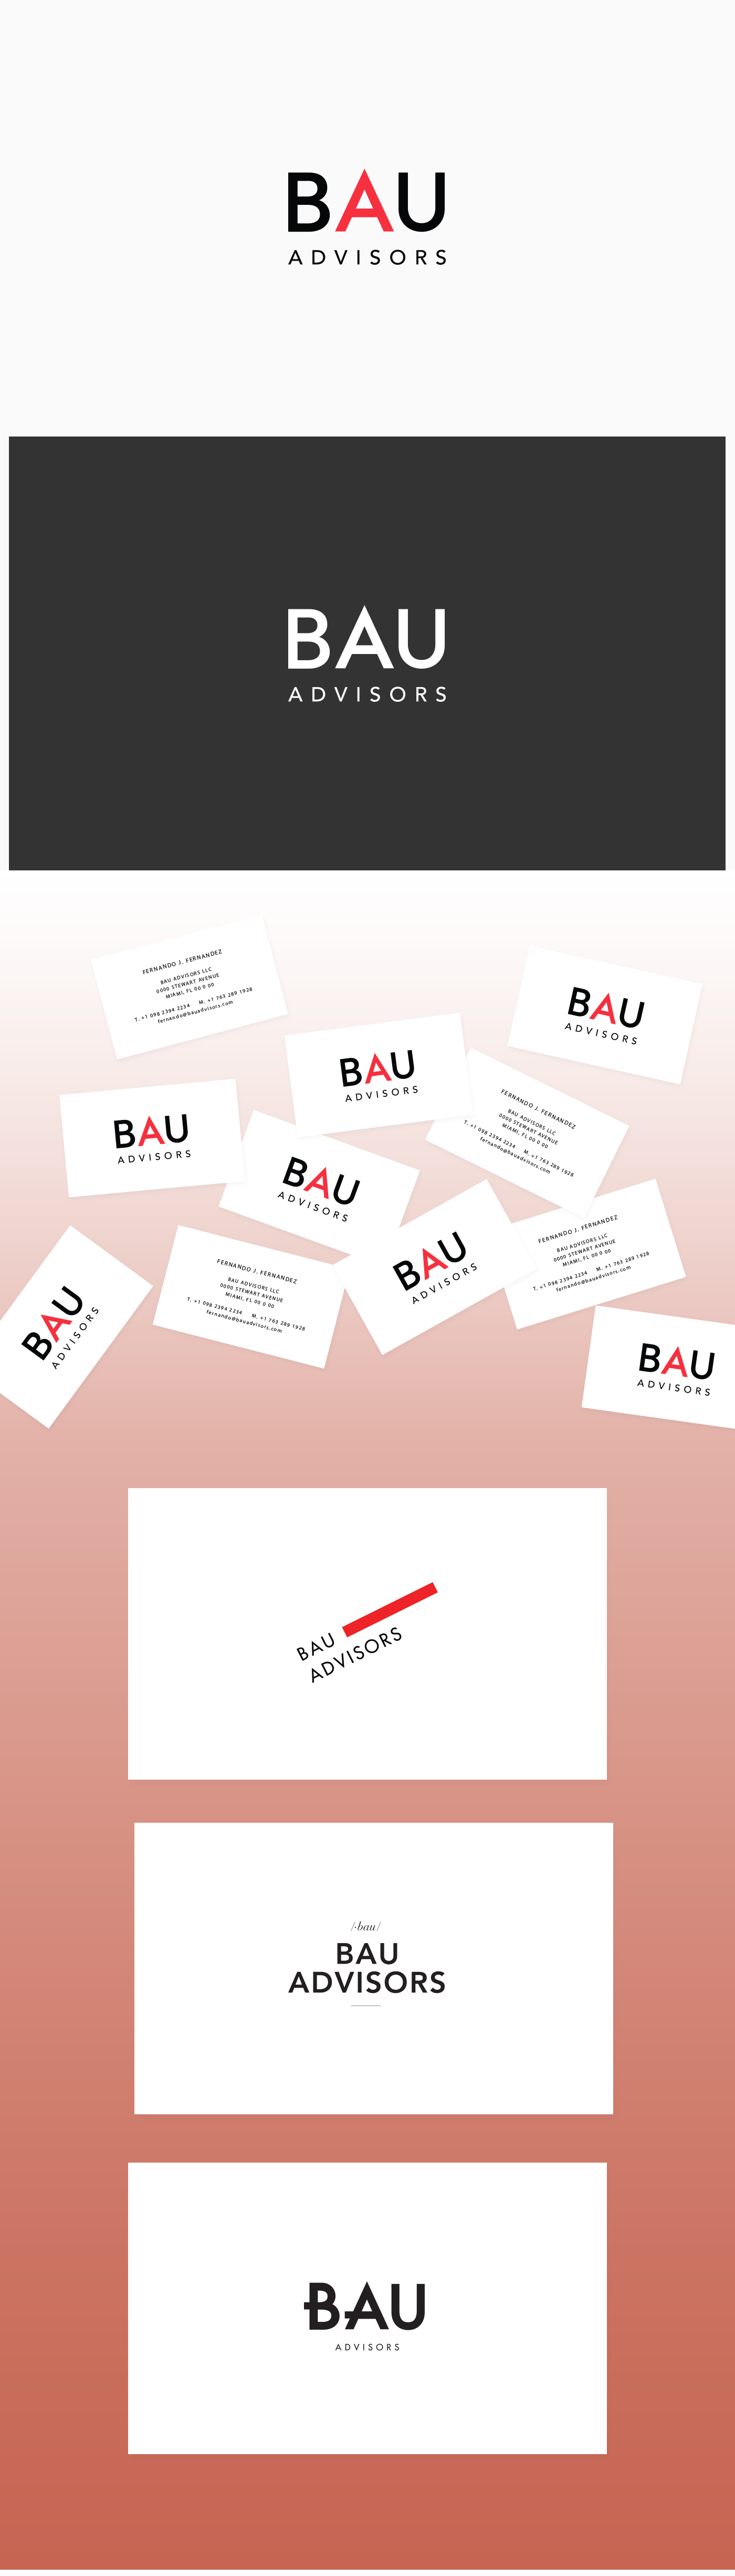 bauhaus logo Advisors red Logo Design bold